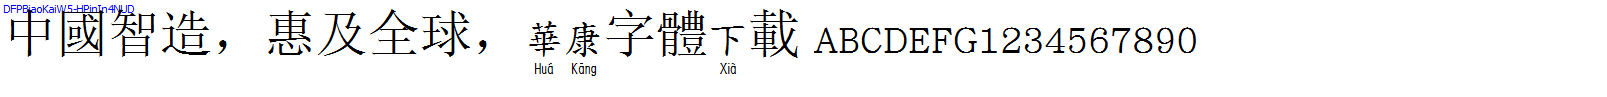 華康字體DFPBiaoKaiW5-HPinIn4NUD.TTF